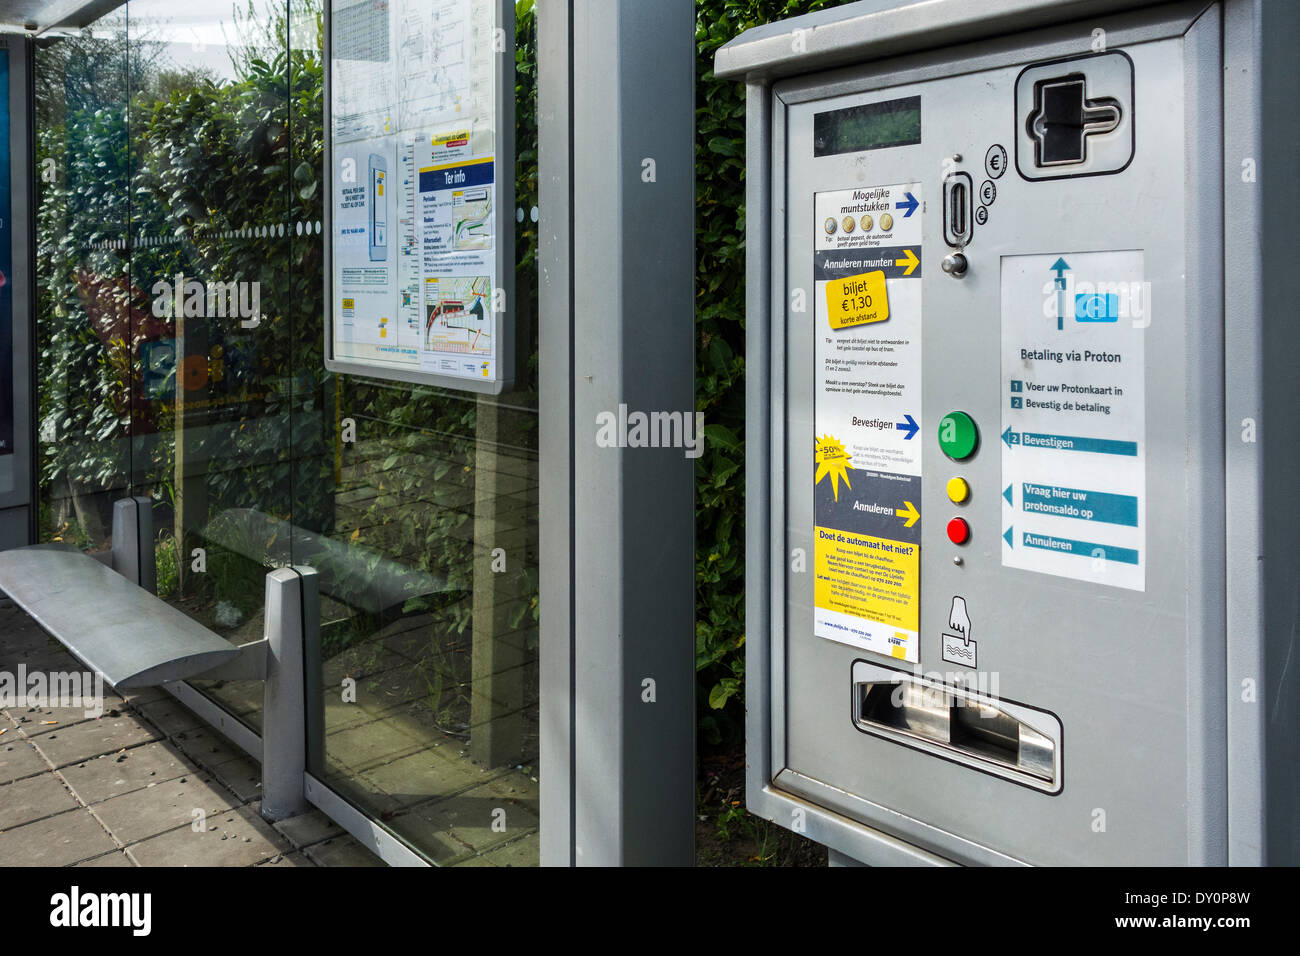 Automatisierte Fahrkartenautomat an Straßenbahnhaltestelle / Bushaltestelle der flämischen Transportunternehmen / Vlaamse Vervoersmaatschappij De Lijn, Belgien Stockfoto